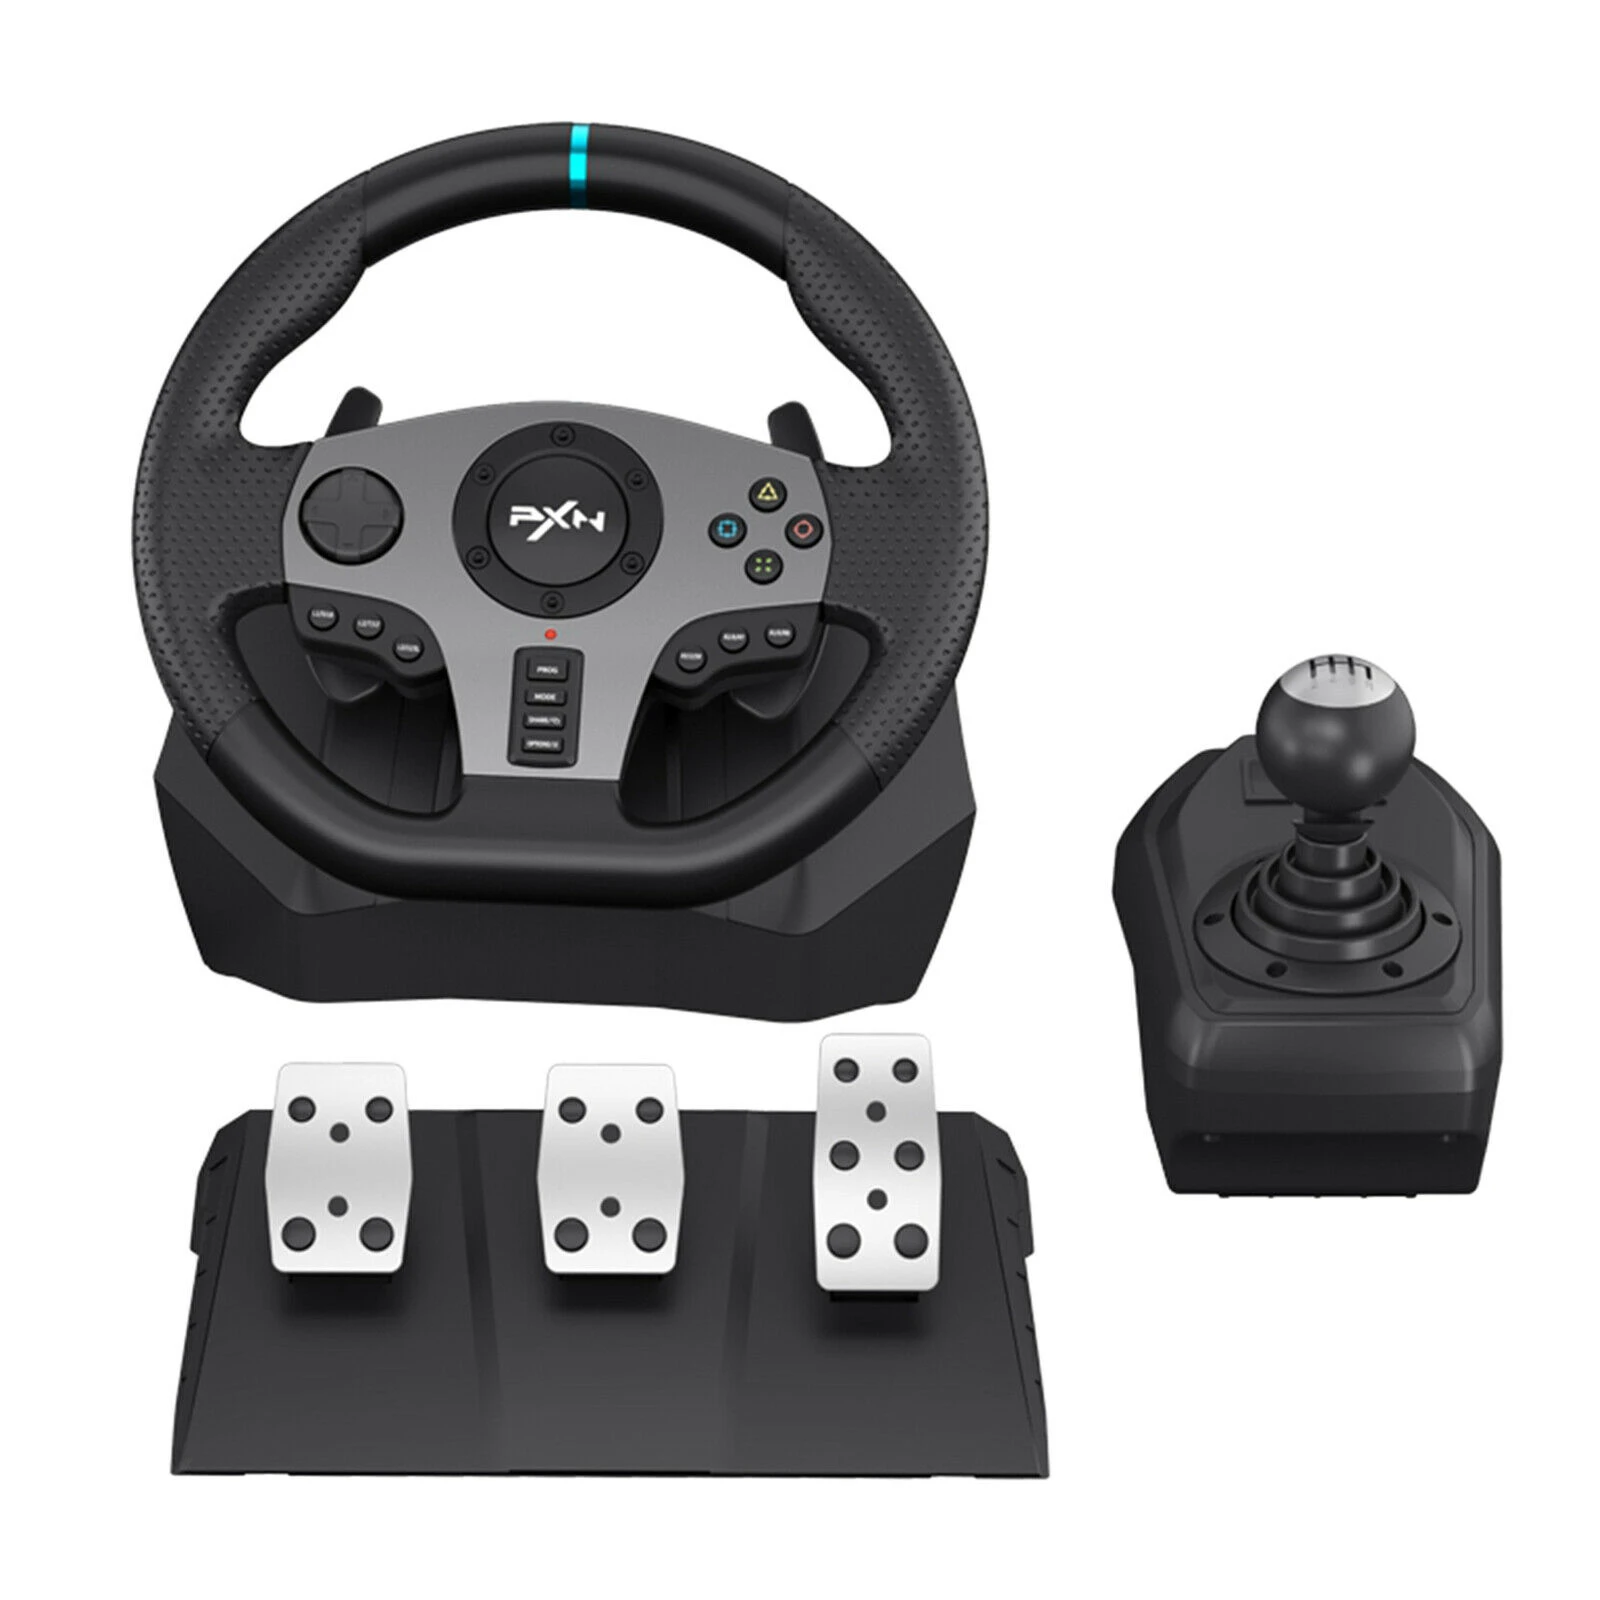 Palanca de cambios de Pedal de volante de carreras, motores de doble  vibración integrados para conducción inteligente V9, Xbox One, PS3/PS4,  accesorios de juego|Mandos para videojuegos| - AliExpress